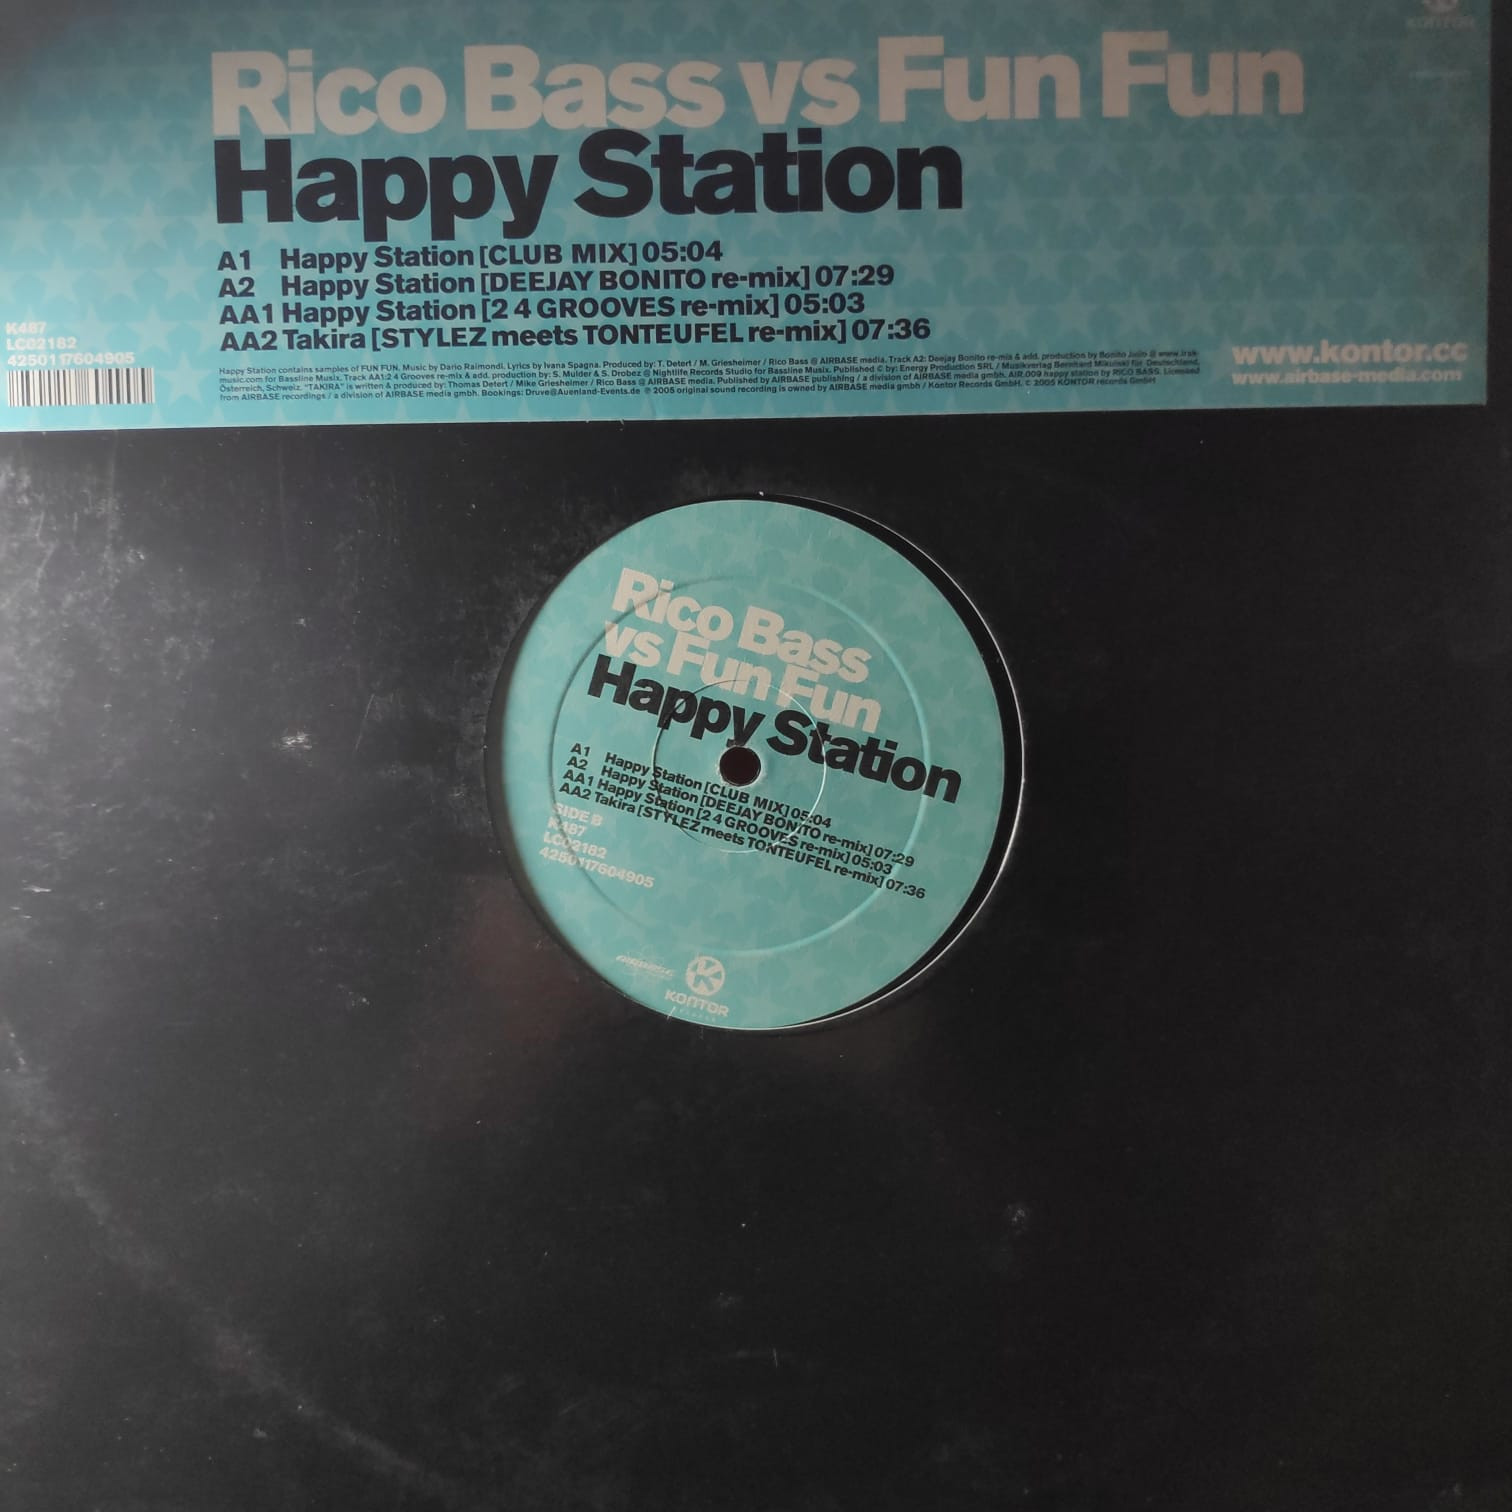 (30362) Rico Bass vs. Fun Fun ‎– Happy Station